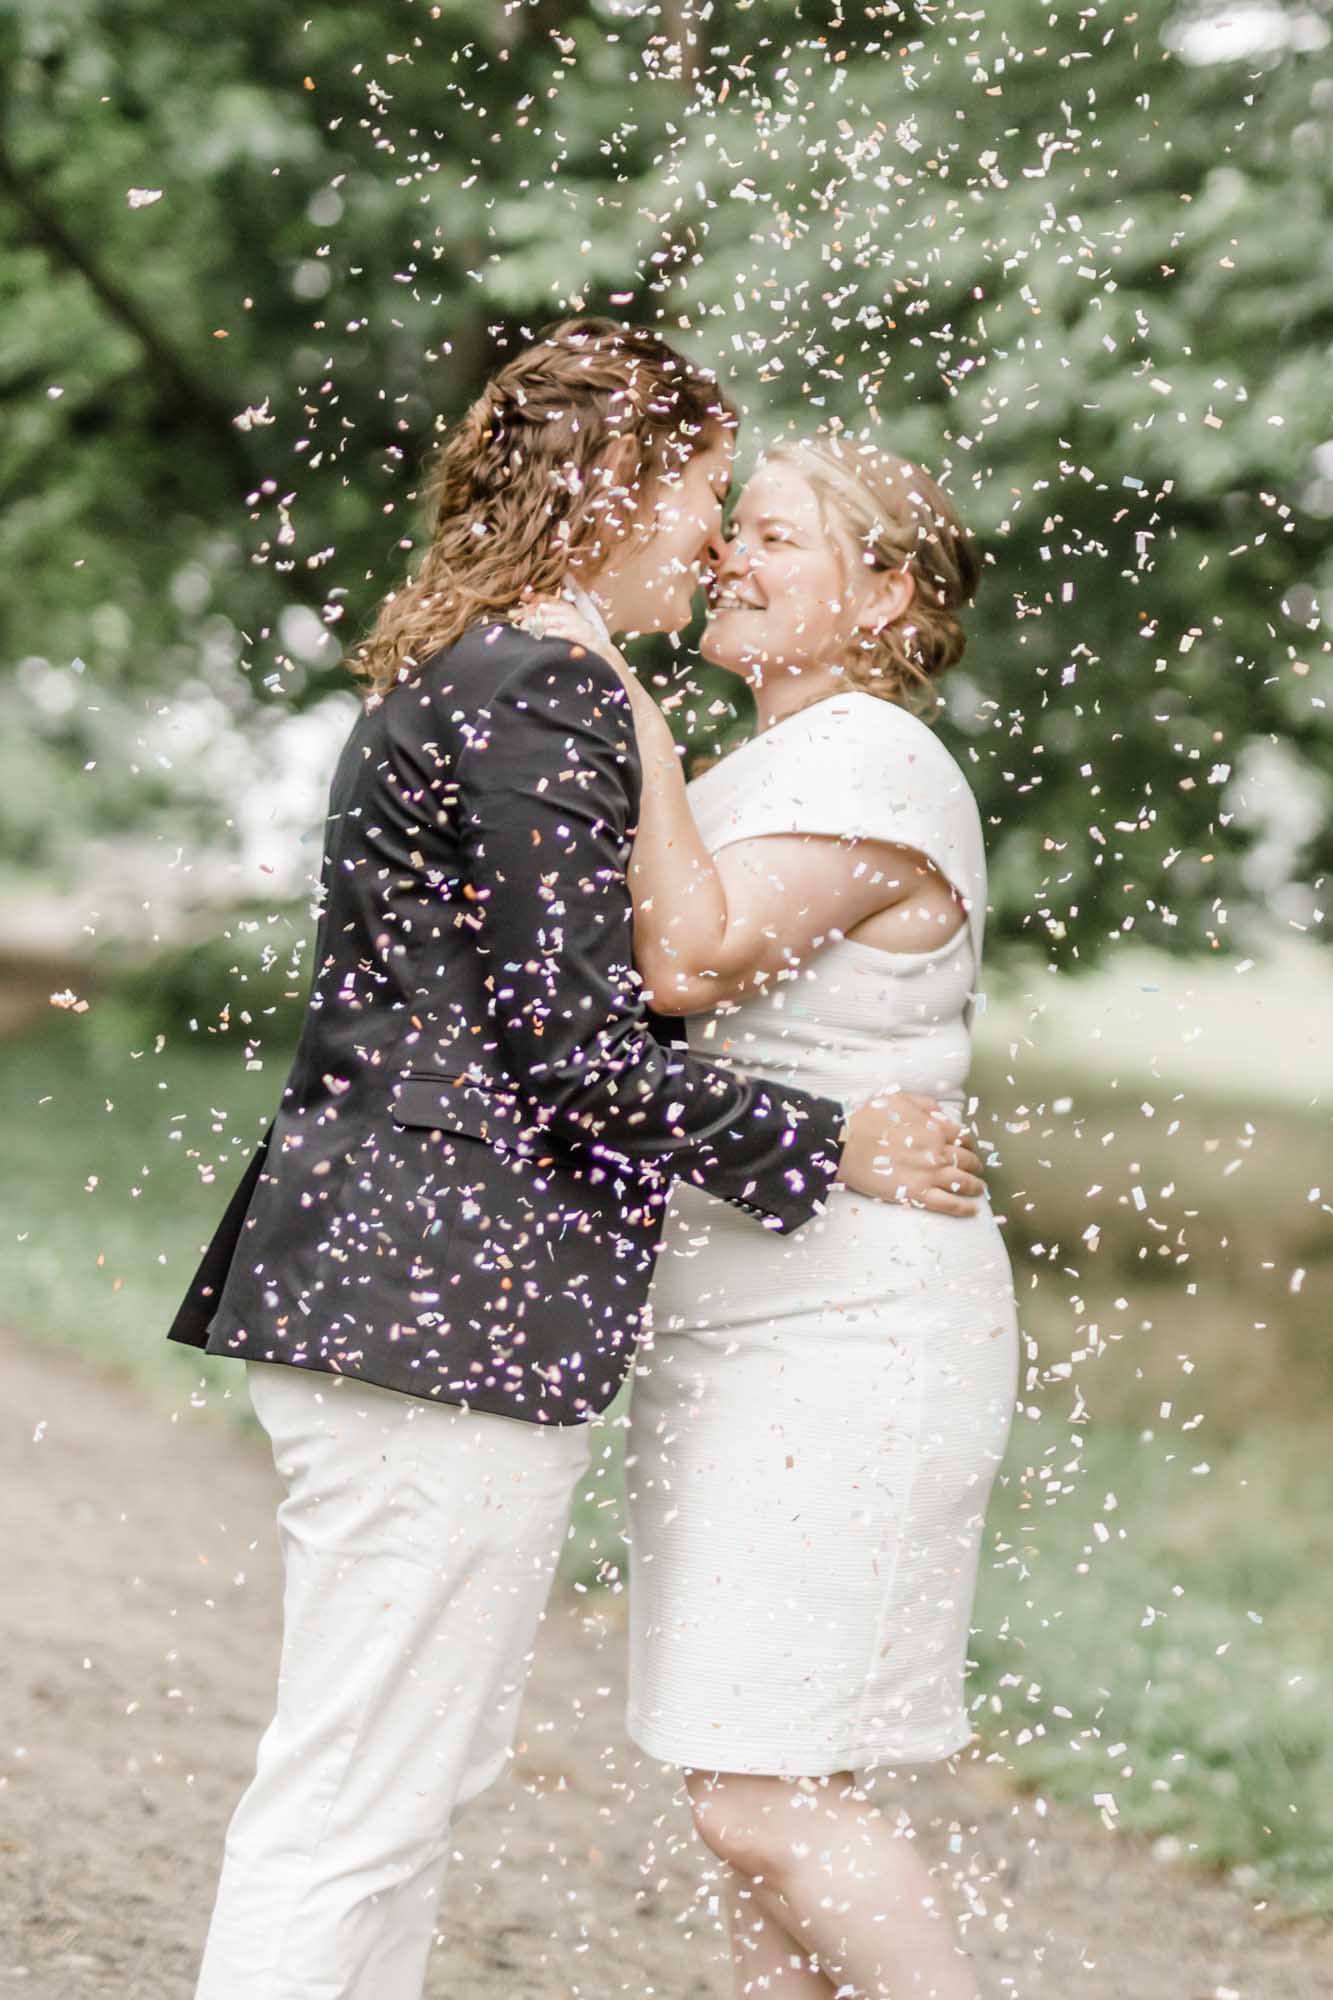 Colorful rainbow wedding inspiration | Lindsay & Co. Photo | Featured on Equally Wed, the leading LGBTQ+ wedding magazine